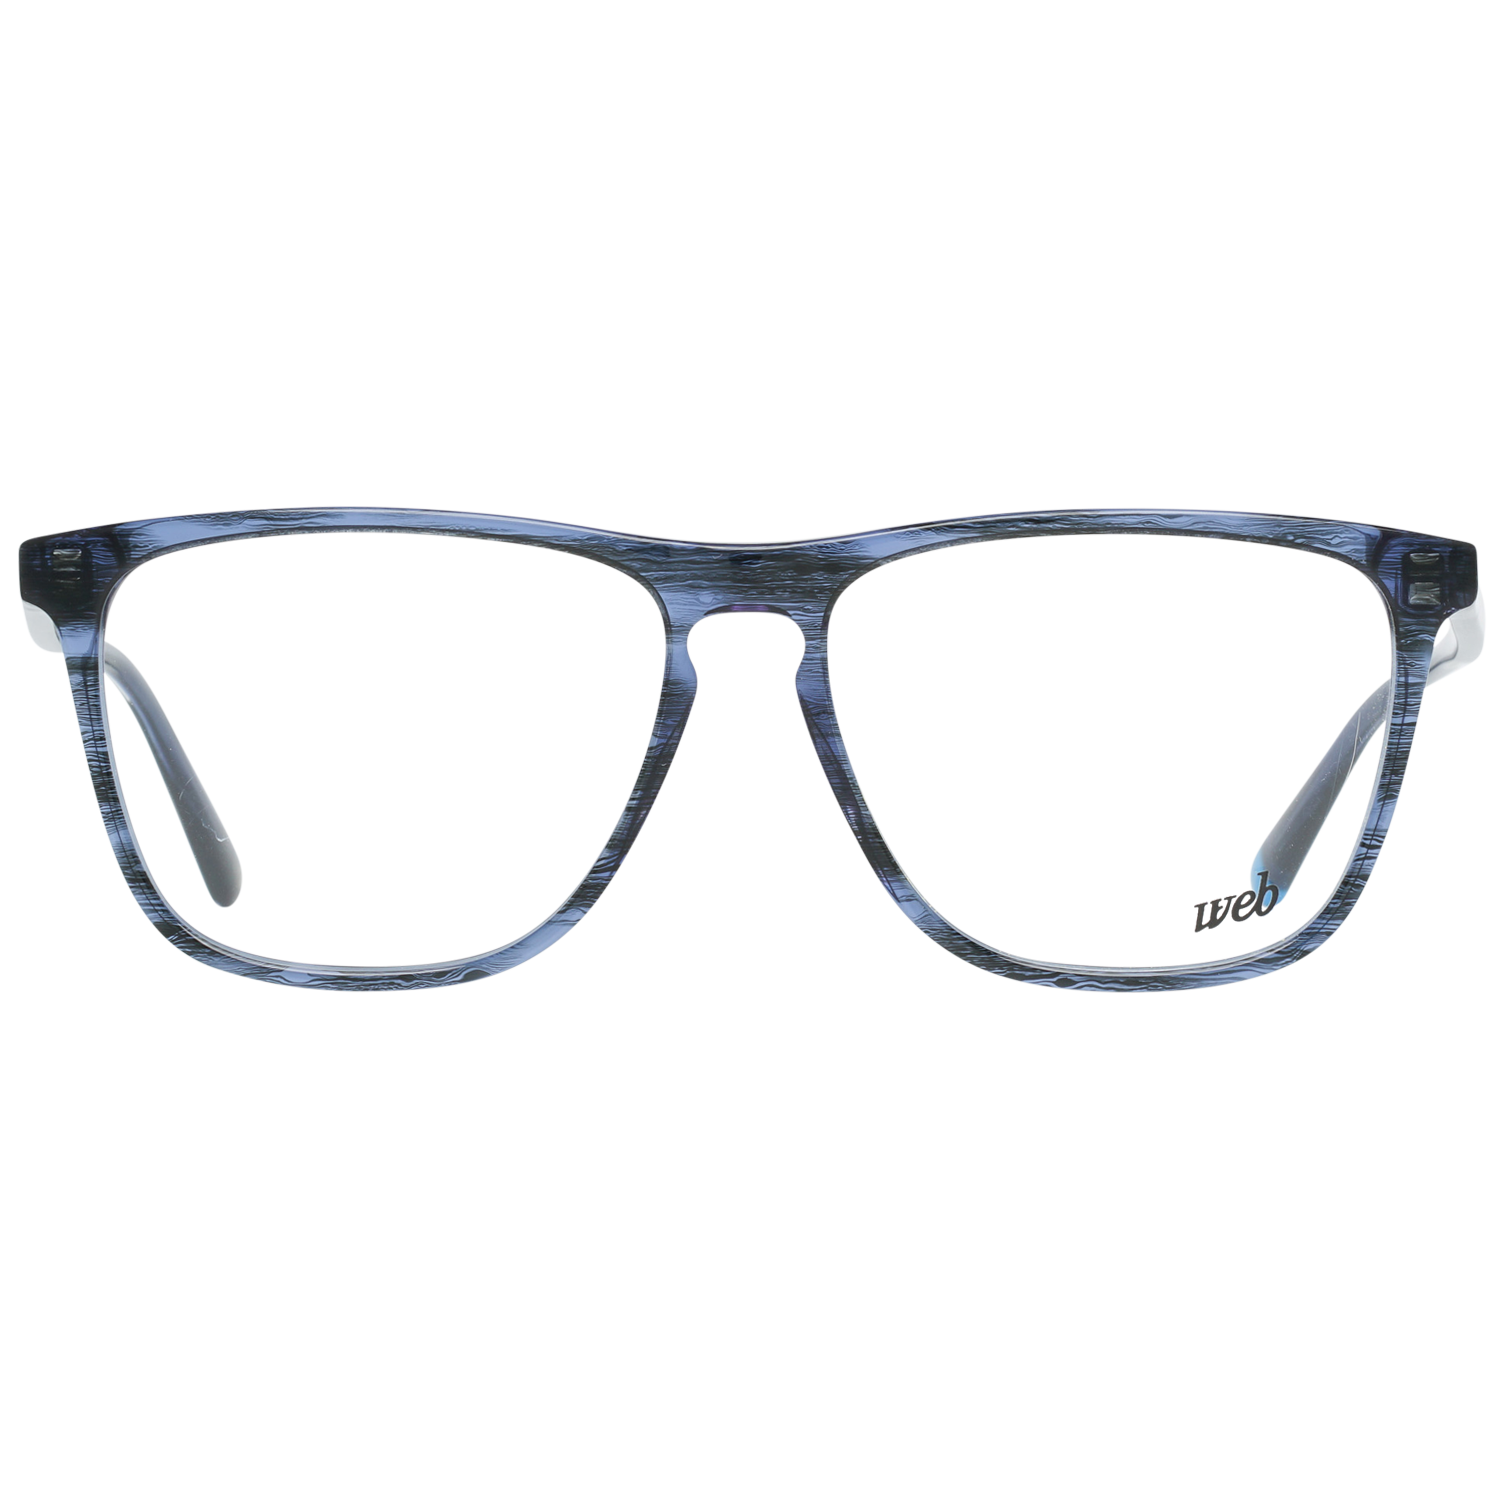 Web Frames Web Prescription Glasses Optical Frame WE5286 092 55 Eyeglasses Eyewear UK USA Australia 